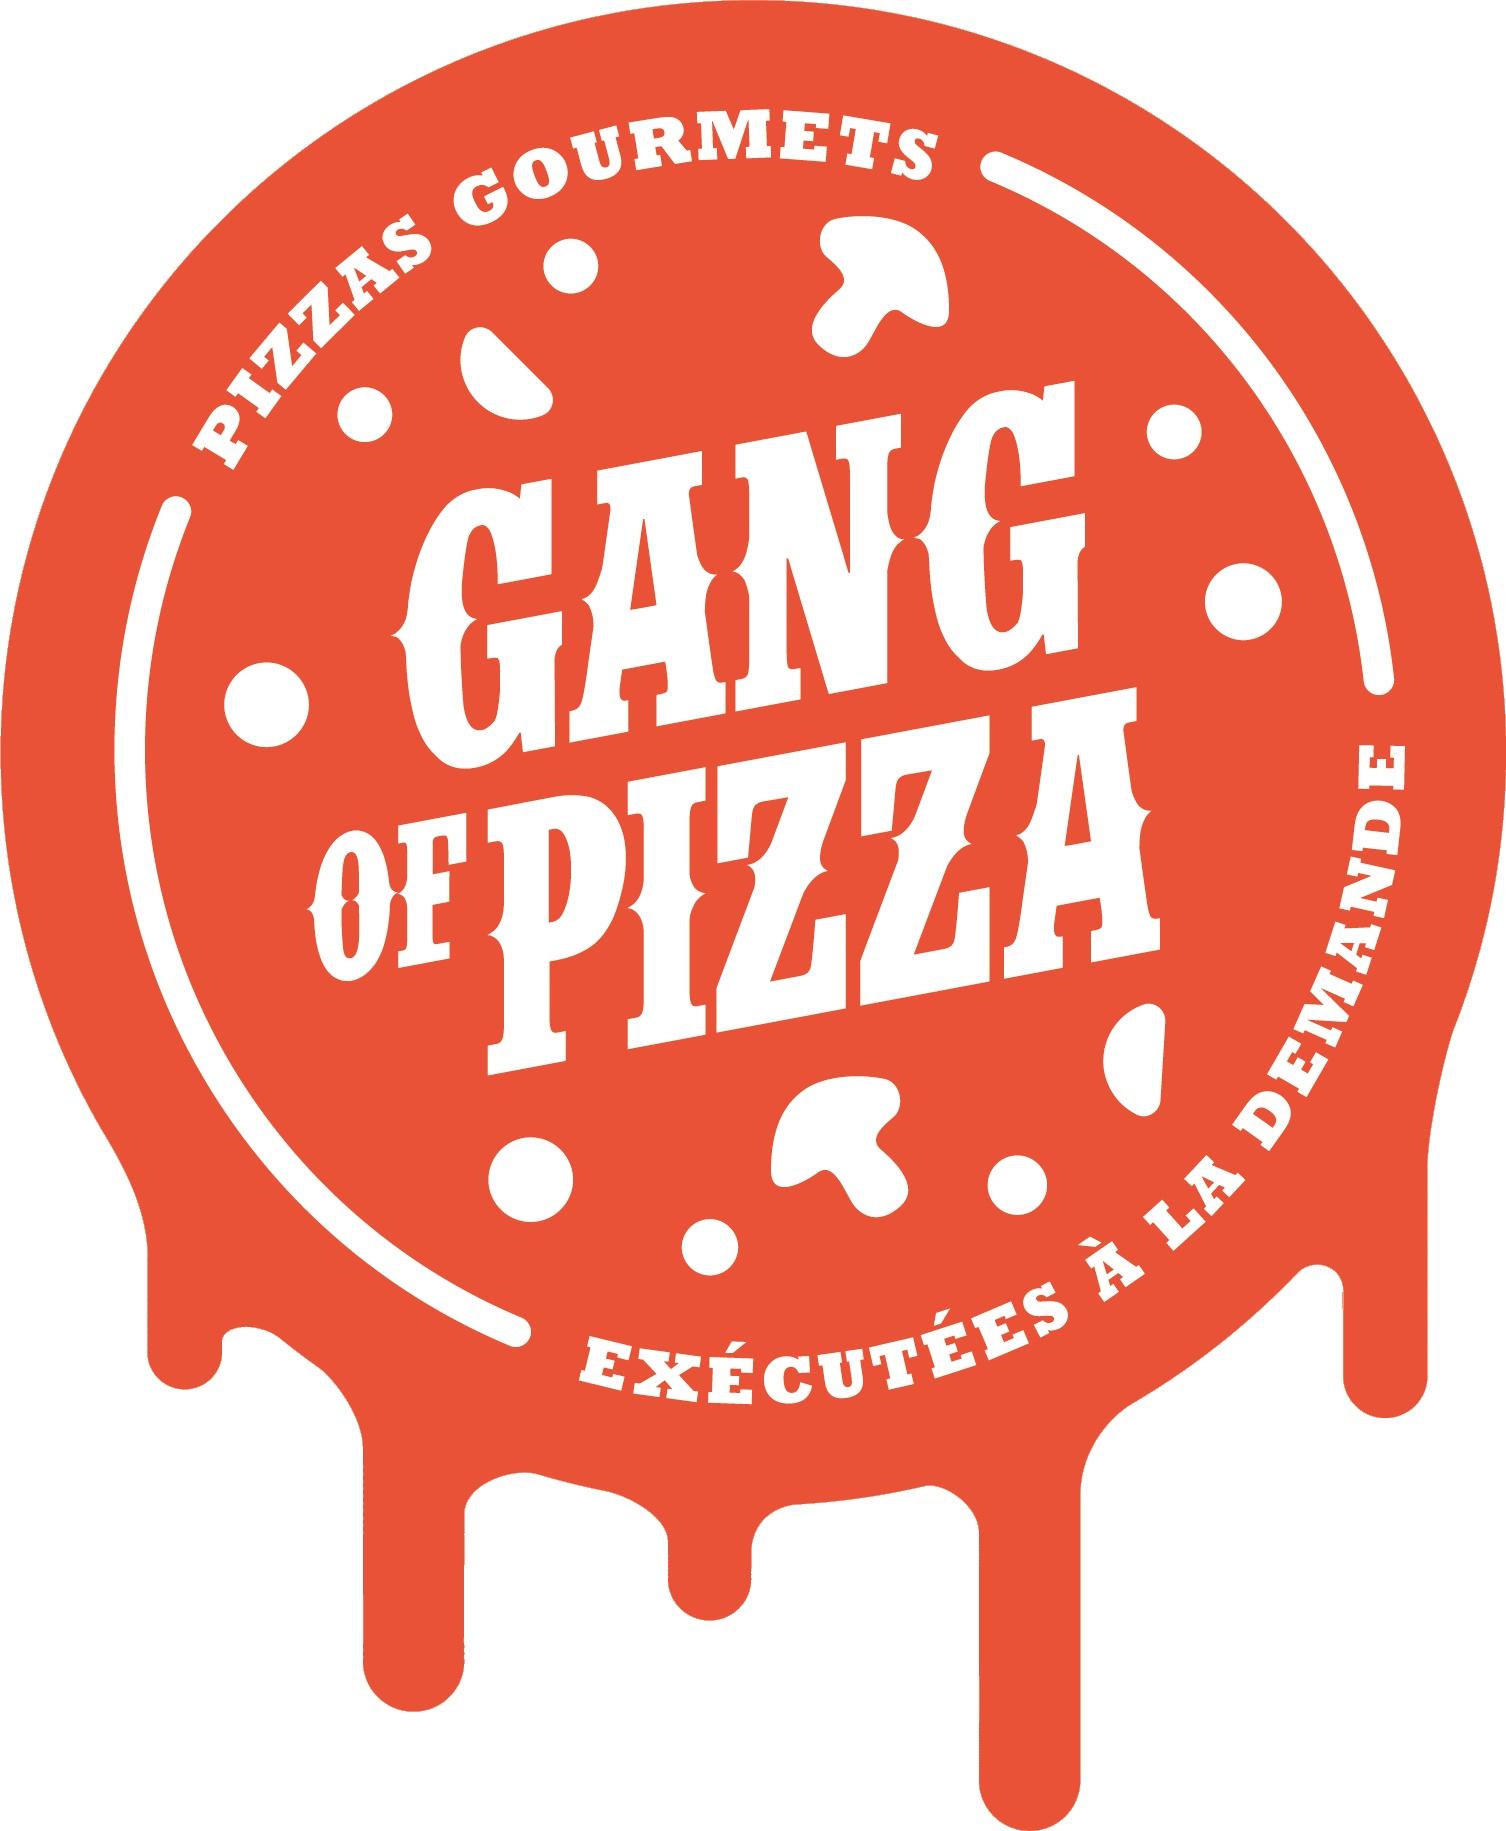 Gang Of Pizza Lanmeur